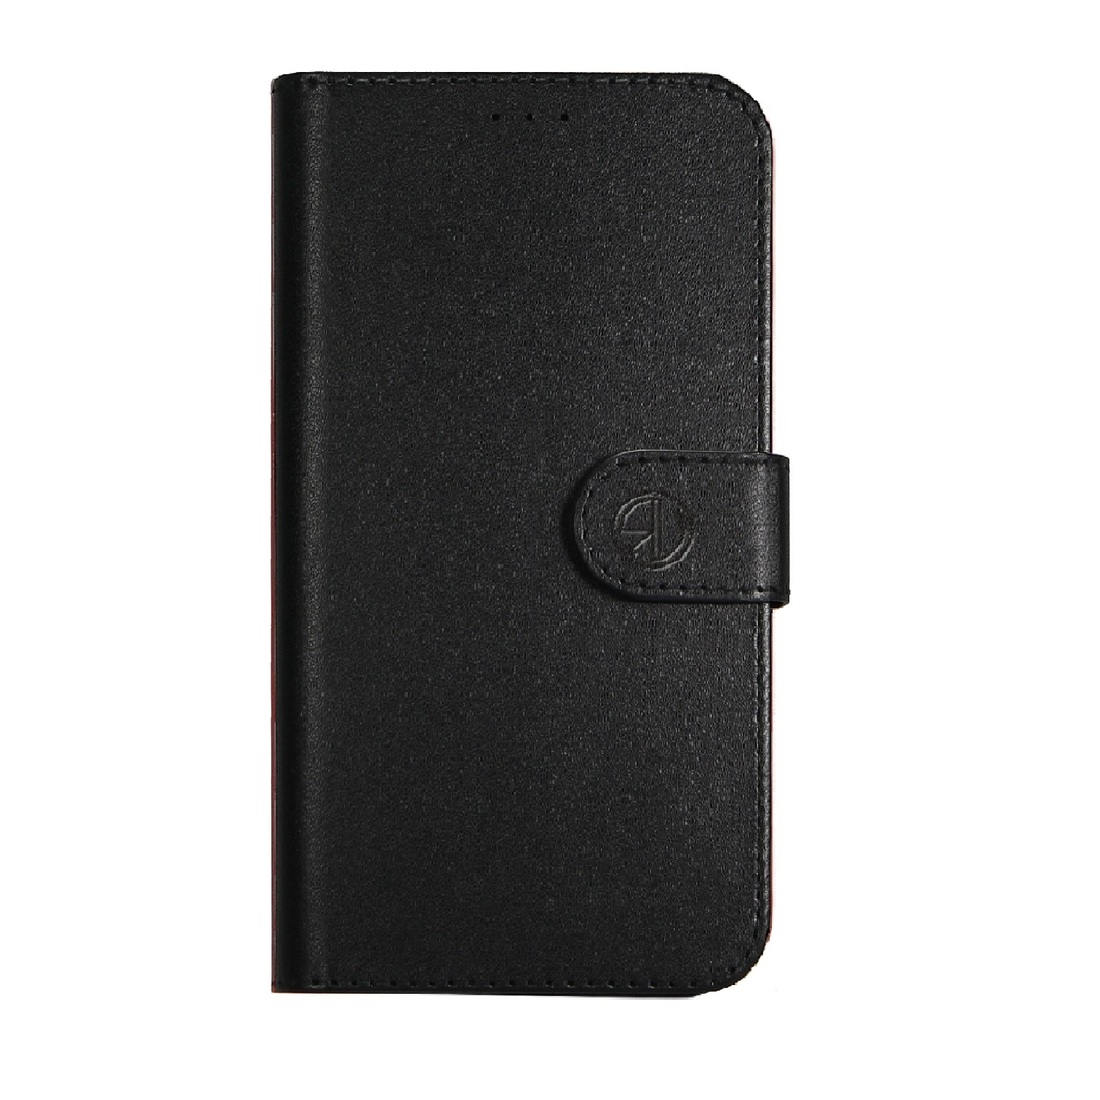 Super Wallet Case iPhone 7/8 black